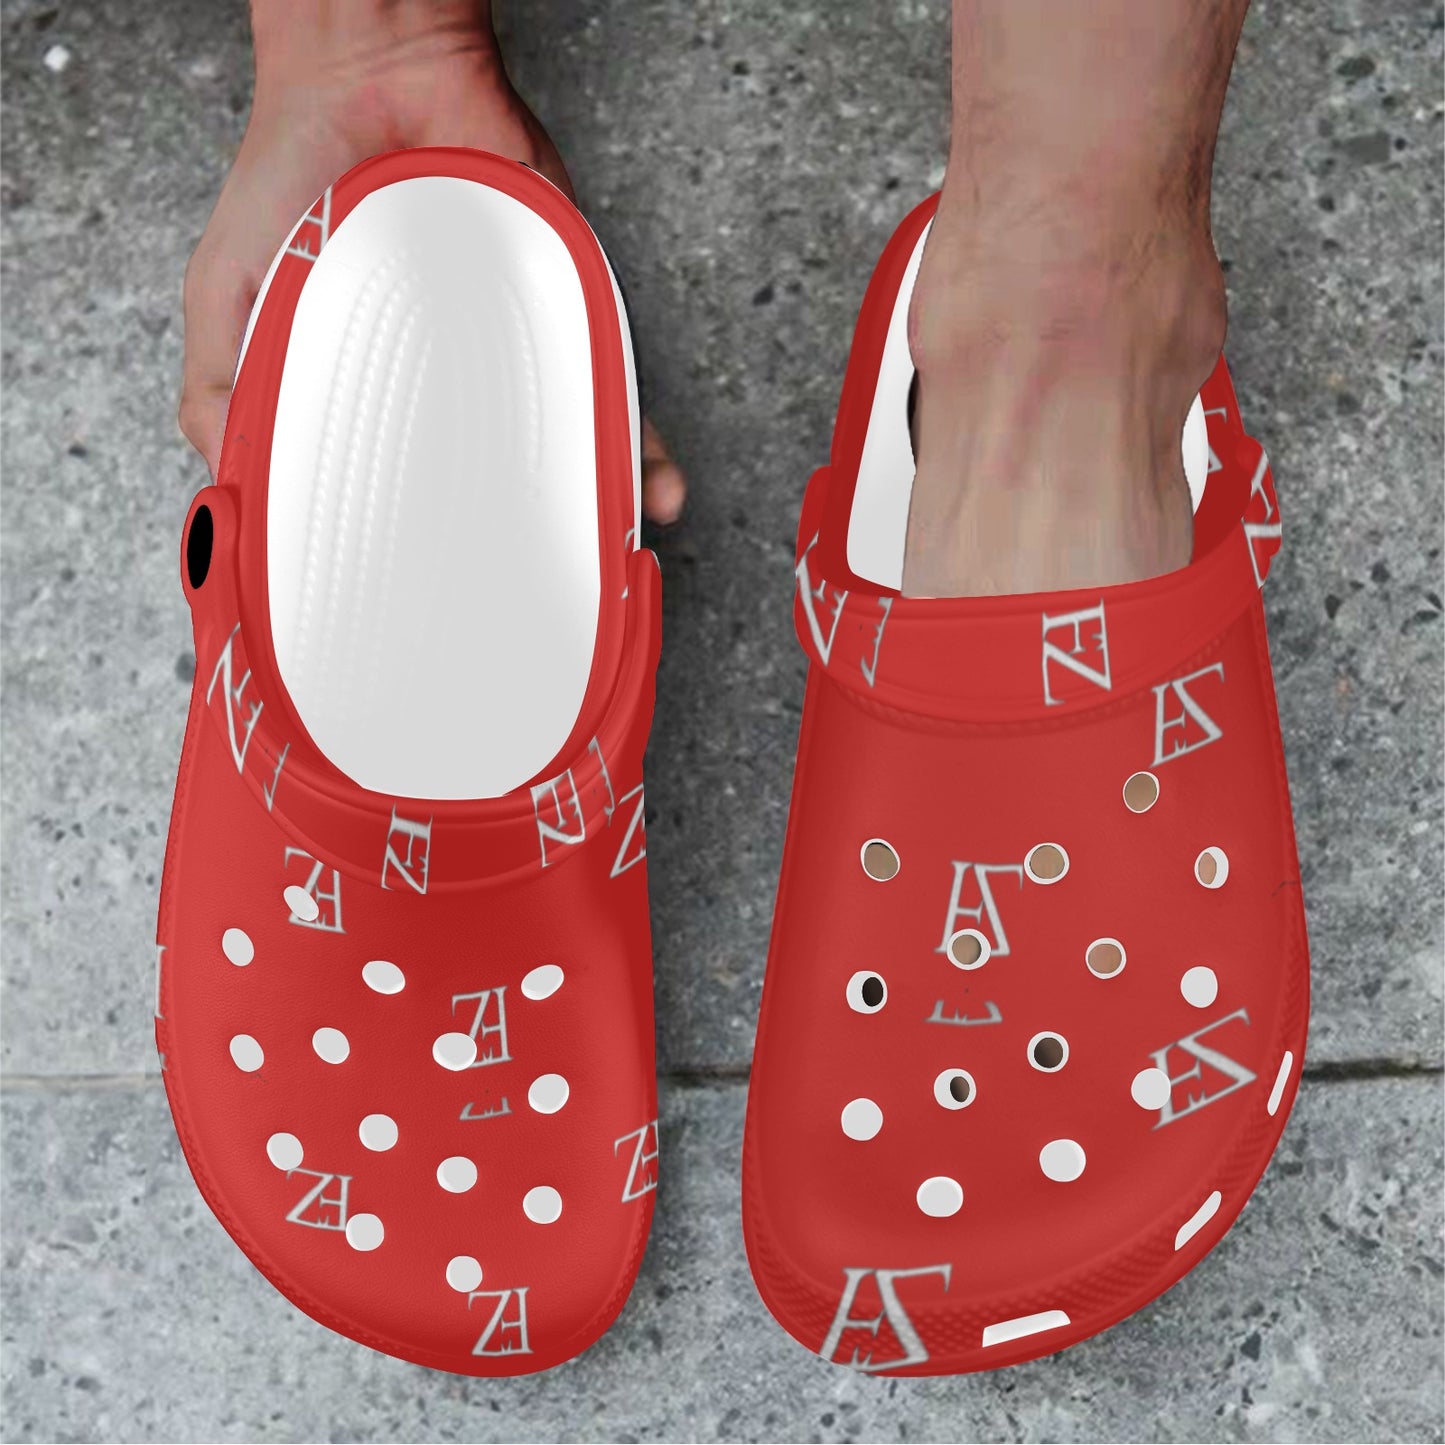 fz unisex sandals - red custom print adults clogs